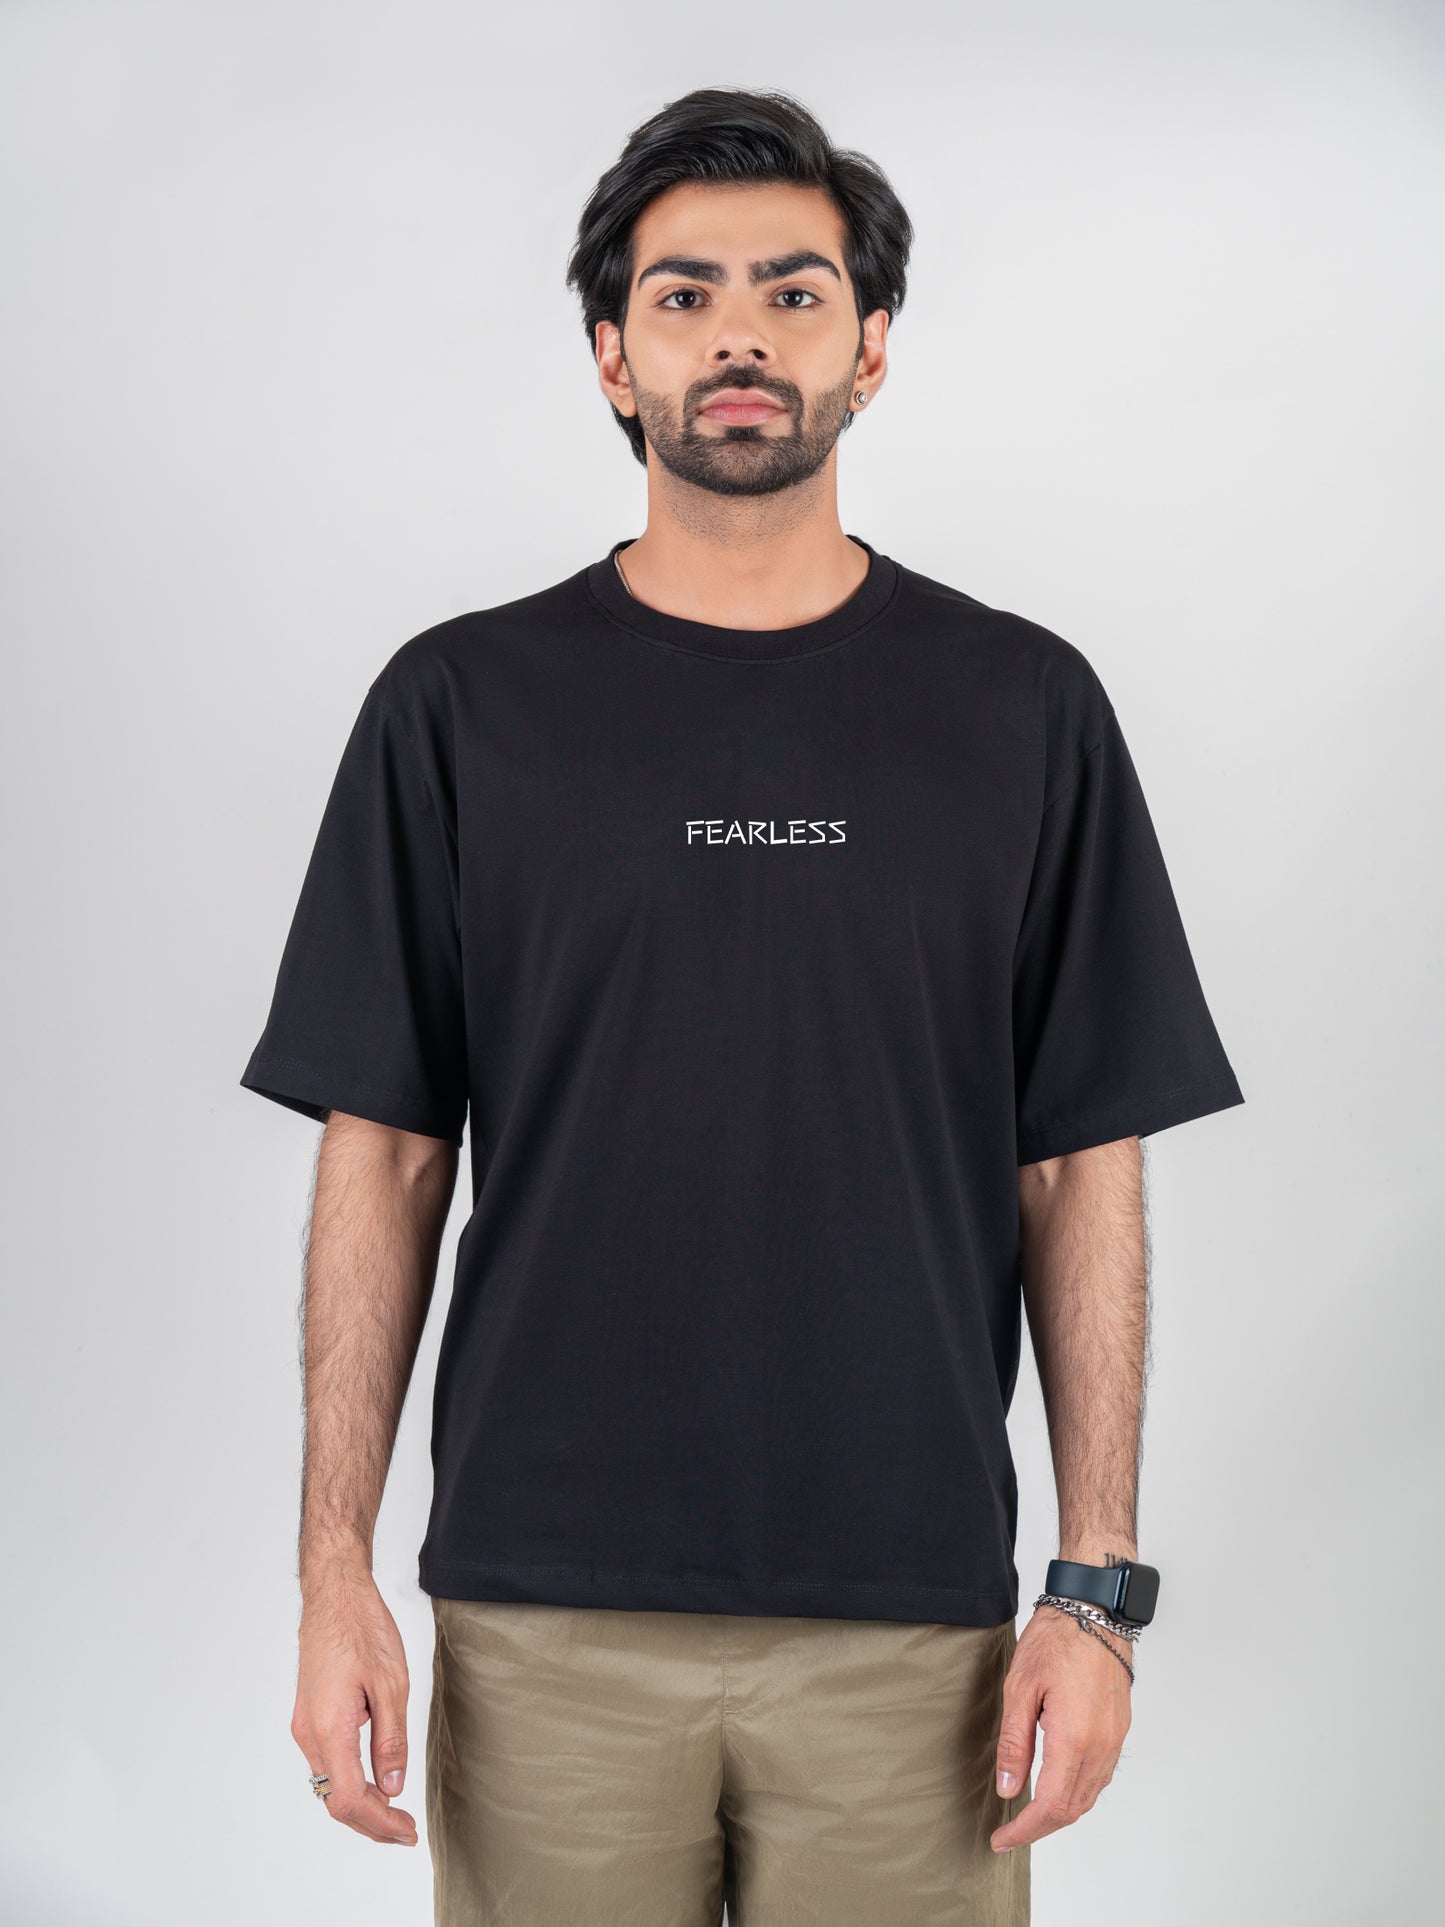 Classic Fearless Drop-shoulder Black Cotten T-Shirt